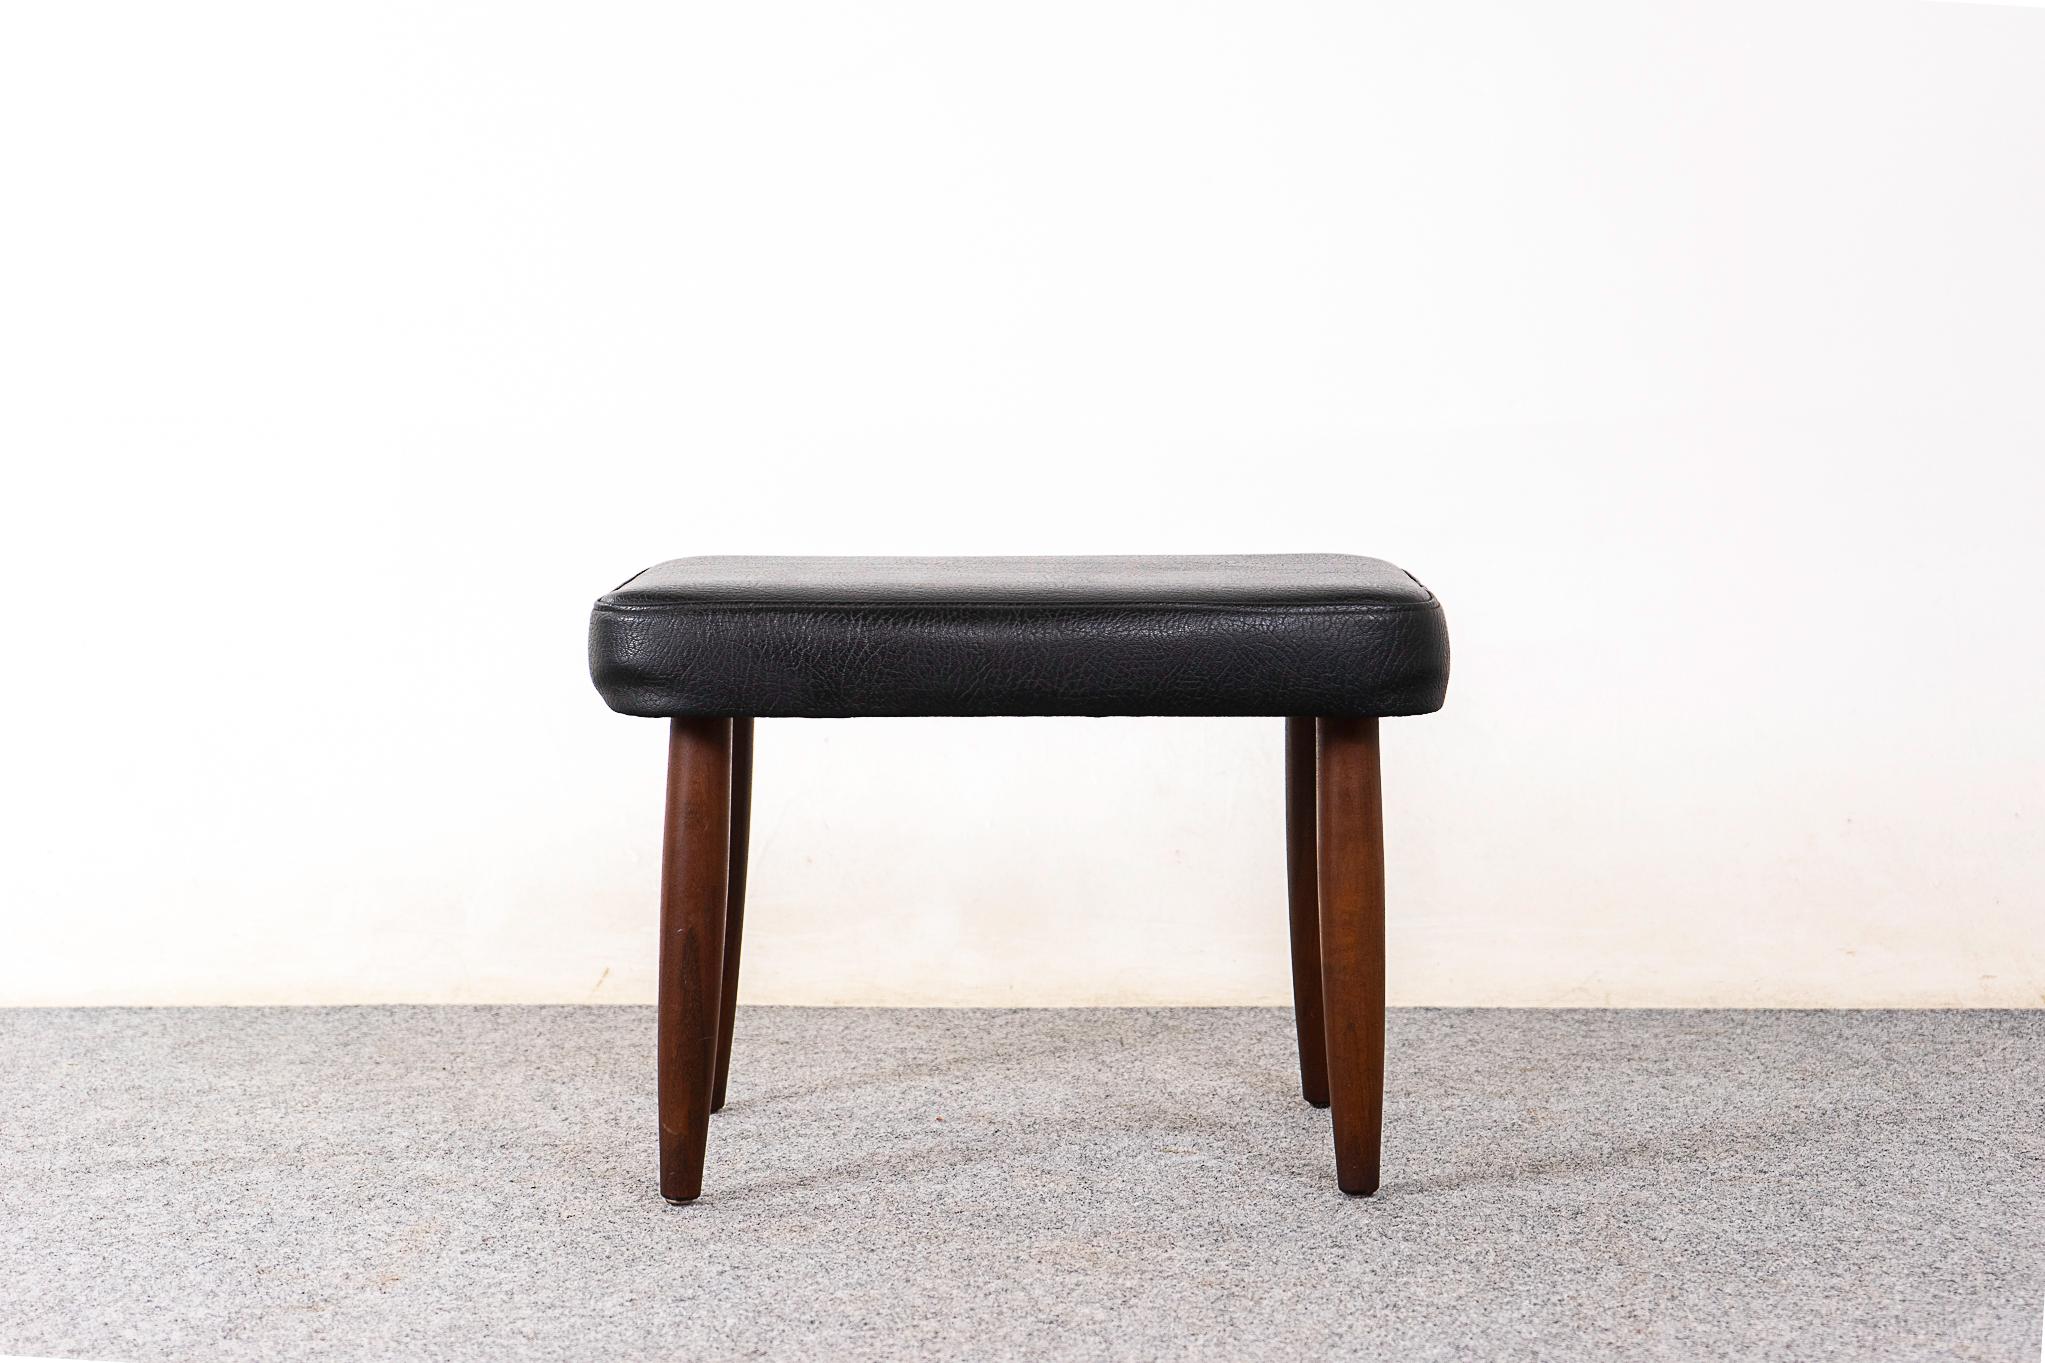 Teak Danish footstool, circa 1960's. Sleek conical legs and original vinyl upholstery with minor wear.
